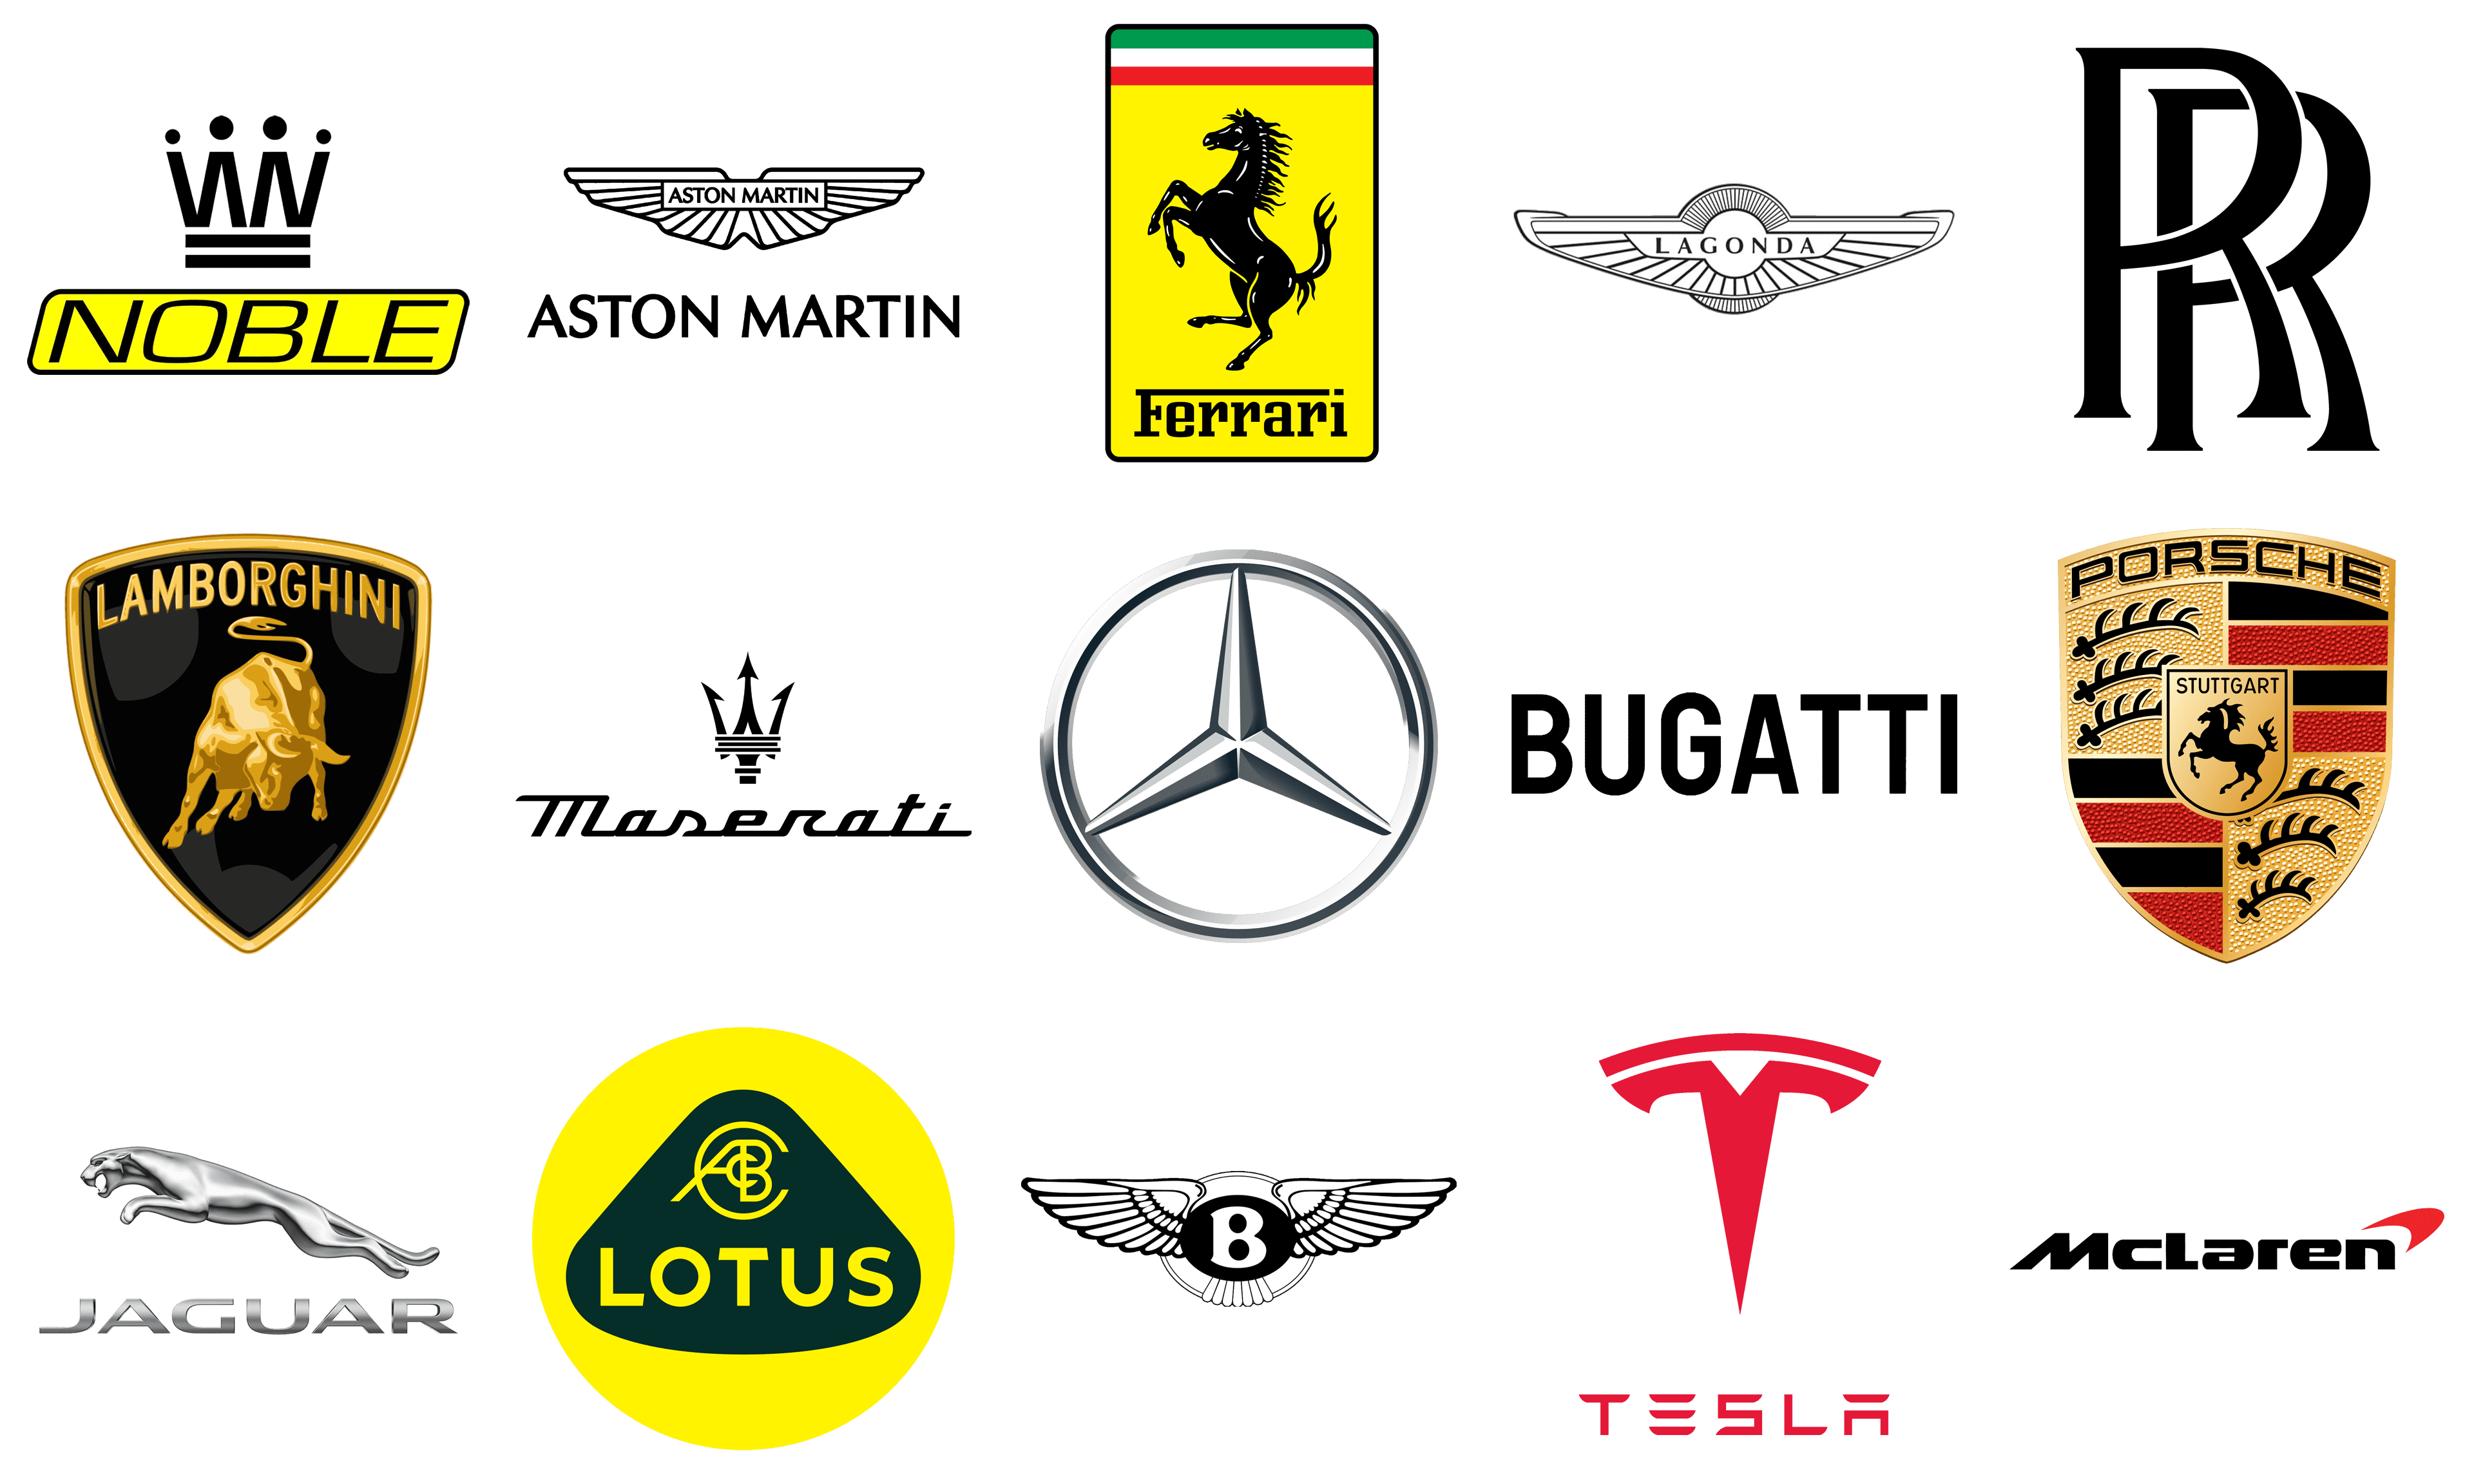 Luxury Car Brands - Top 10 Most Expensive & Best Premium Car Makes